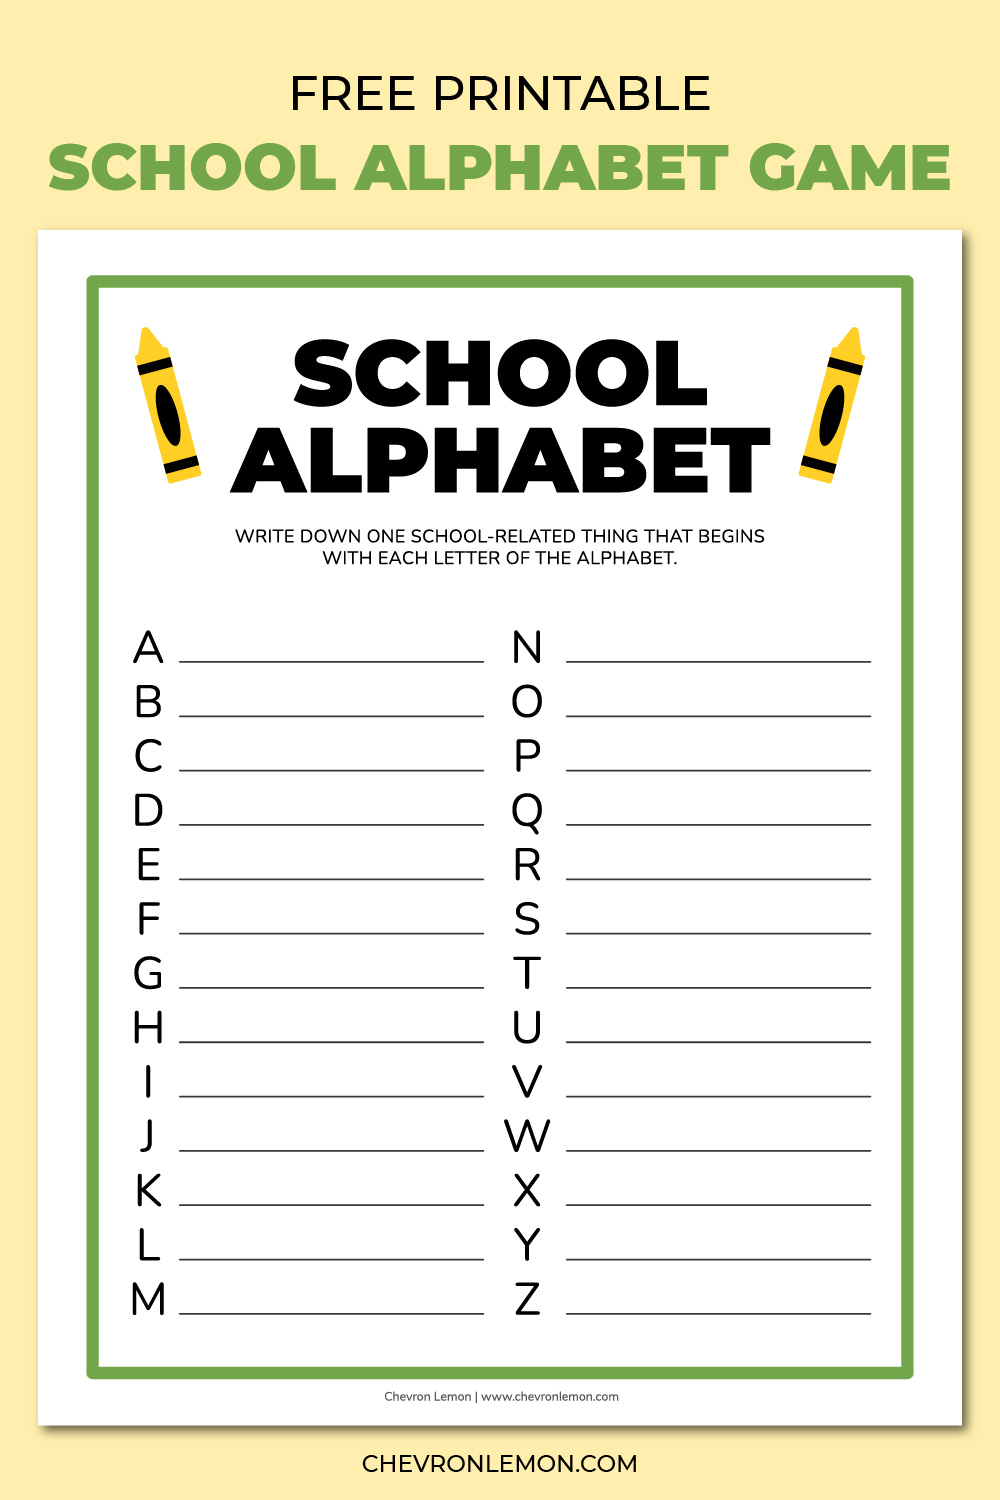 School alphabet game